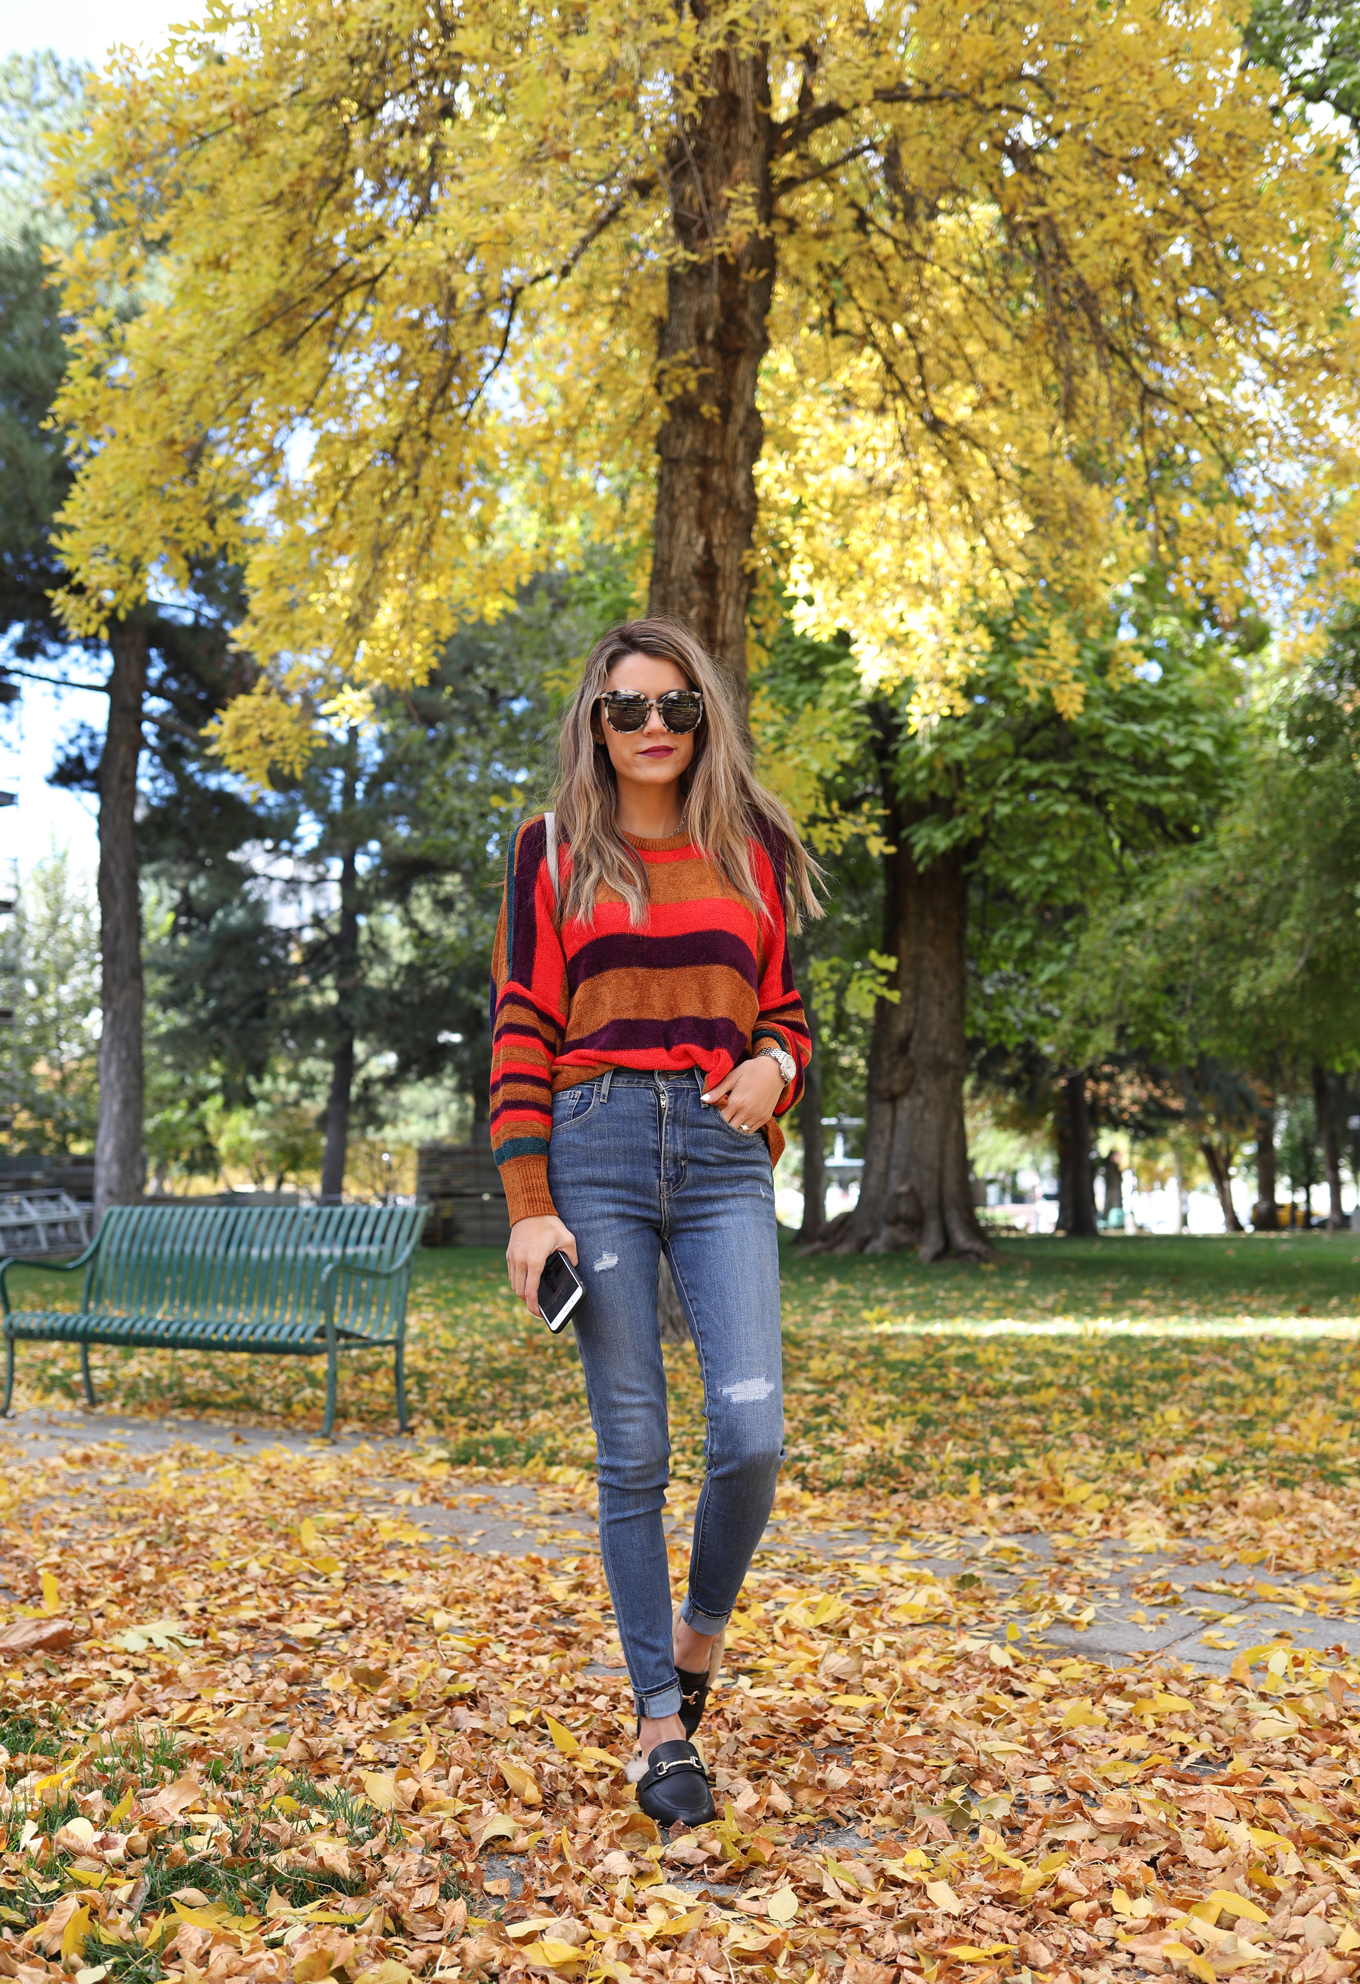 Sweaters & Stripes | Hello Fashion